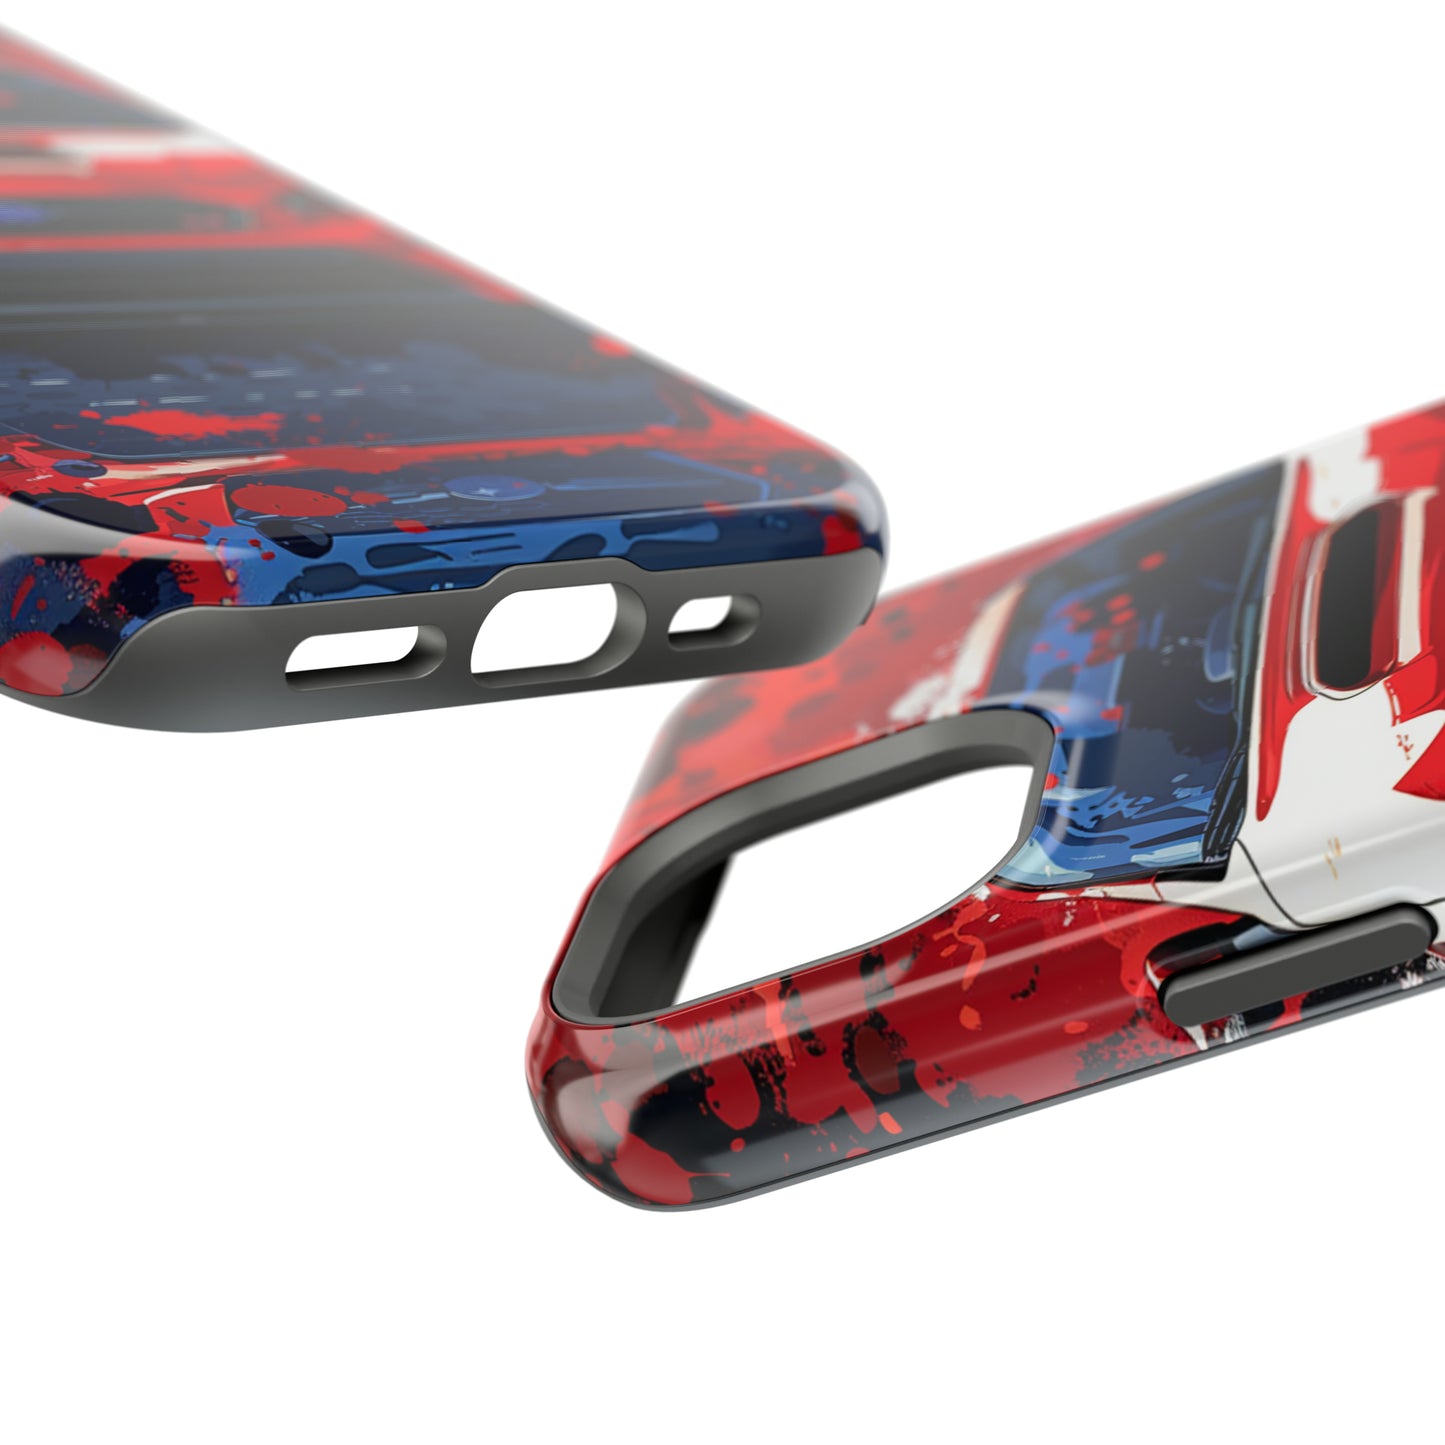 Subaru WRX STI Red Paint Splash Magsafe Tough iPhone Case